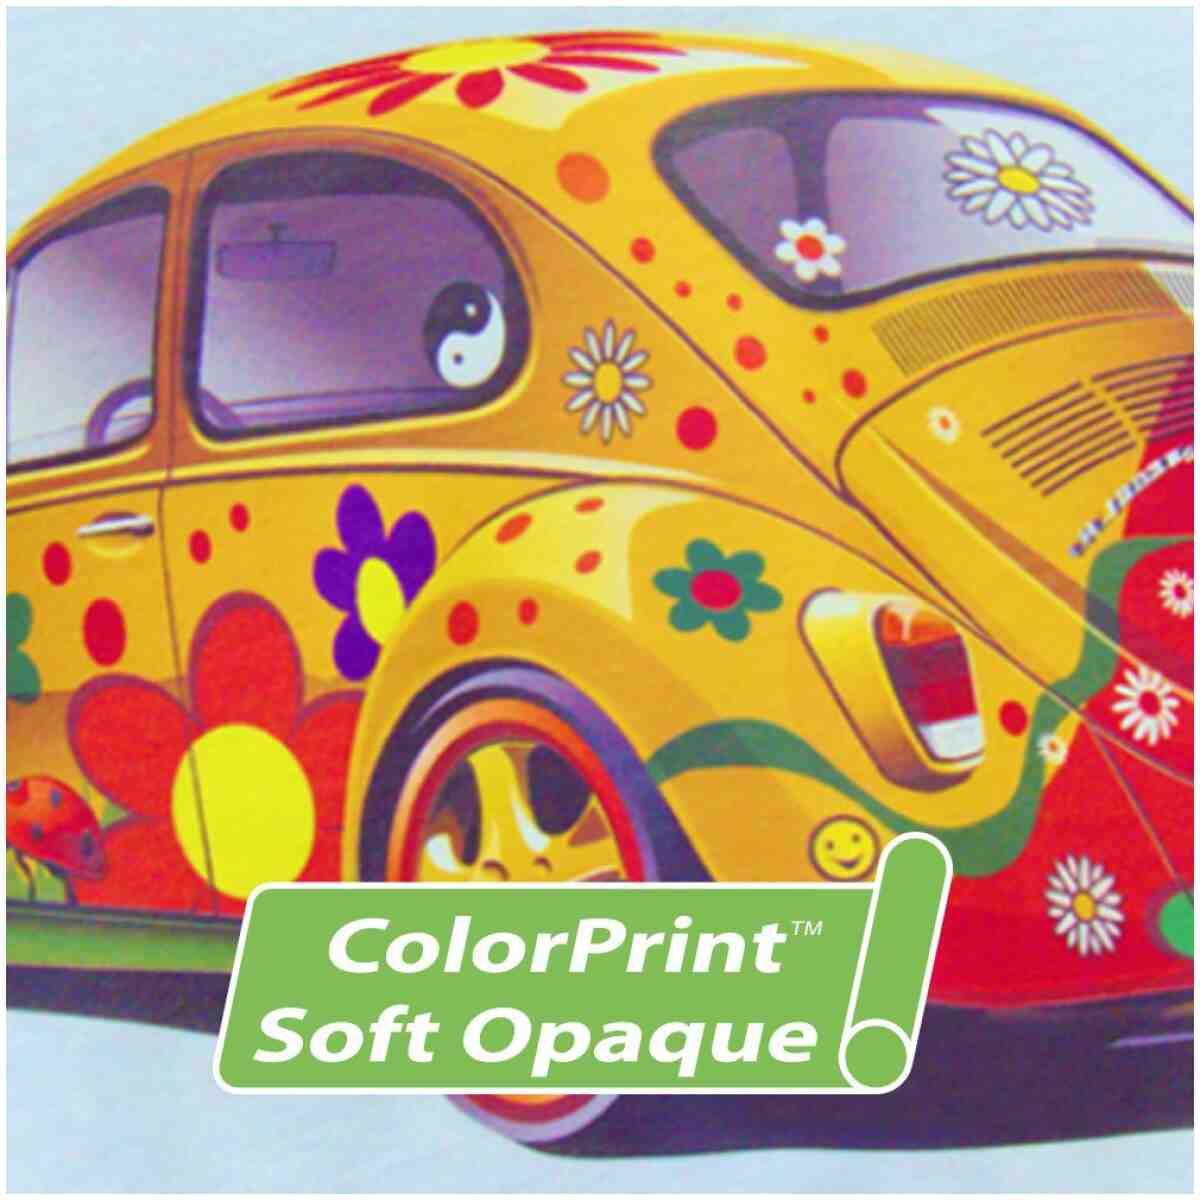 Colorprint™ Soft Opaque Print & Cut Digital Media (Htv) 20" SISER®